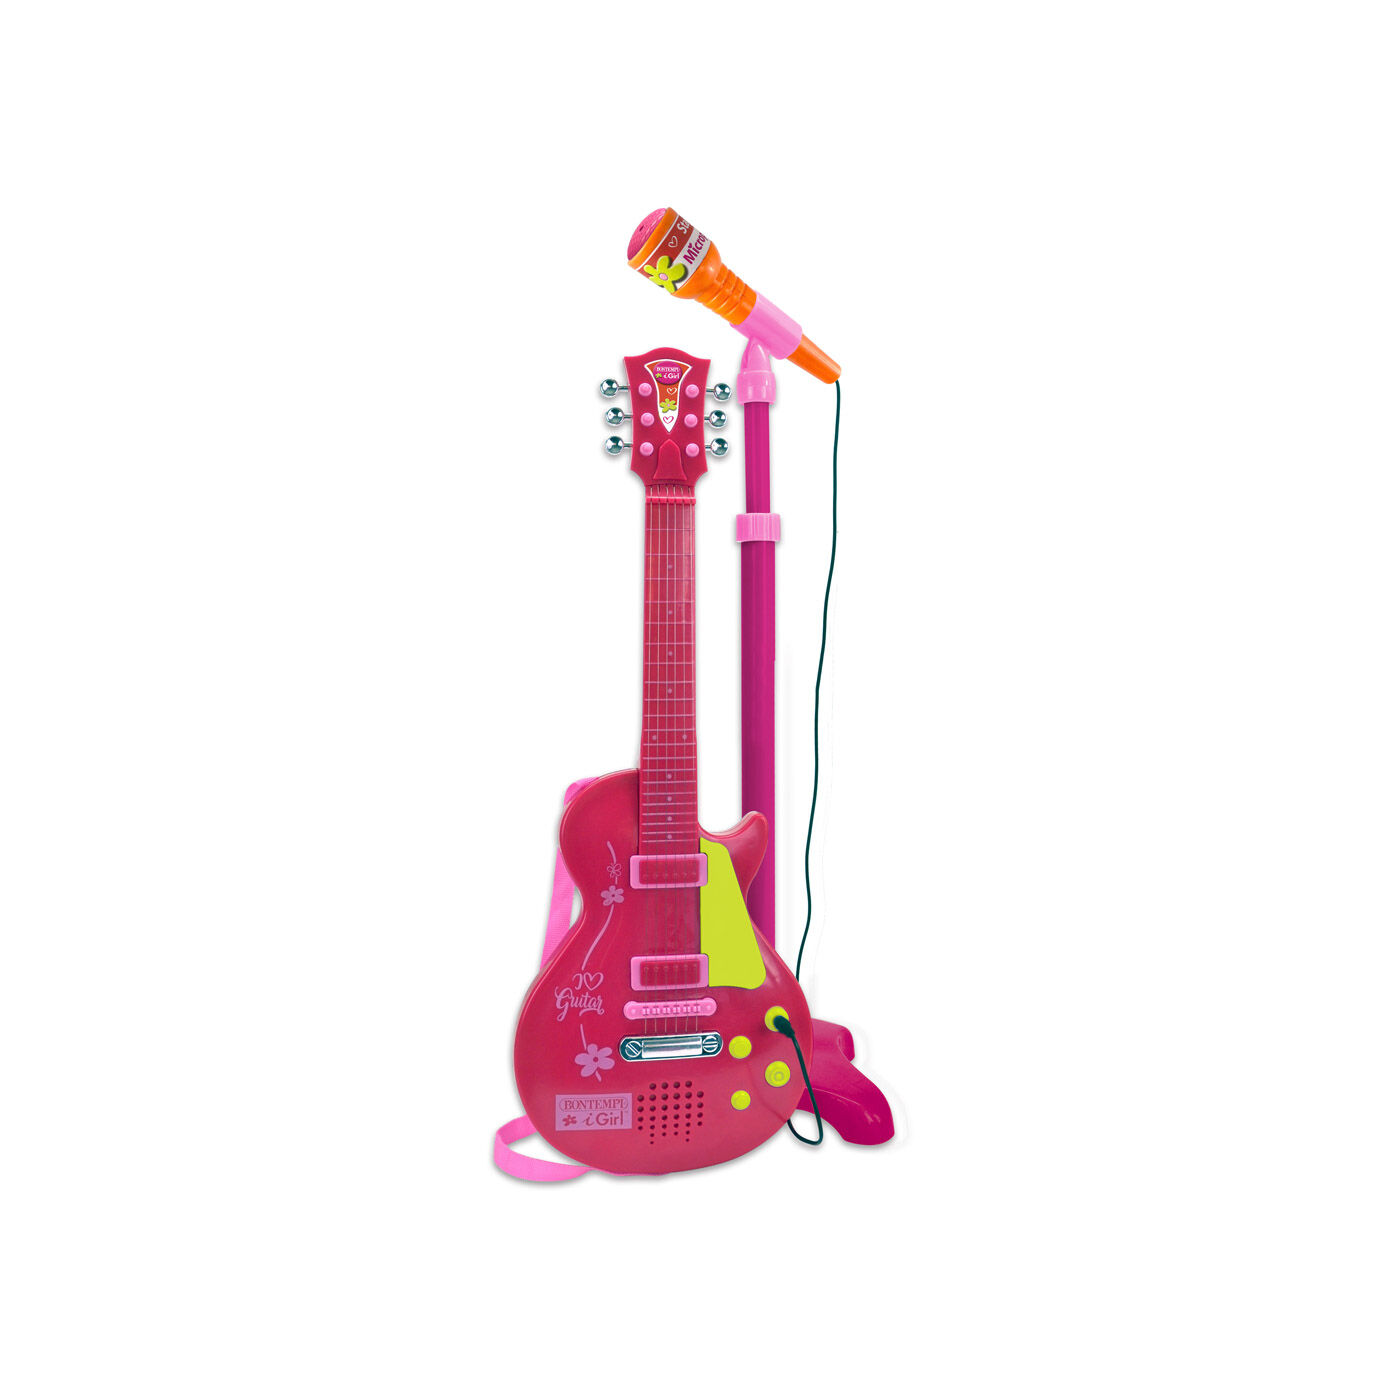 Bontempi rock gitár pink